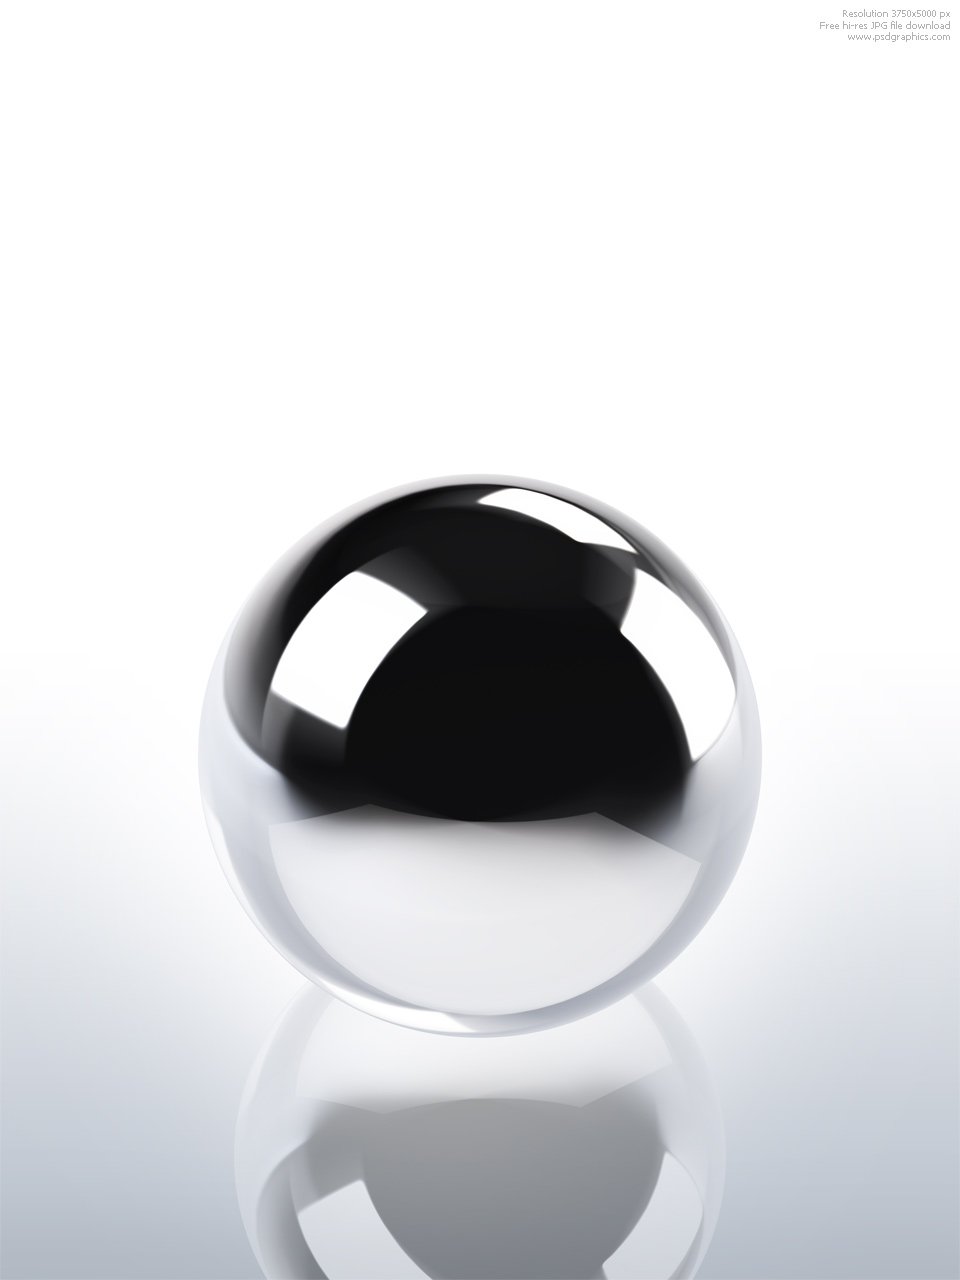 futuristic ball